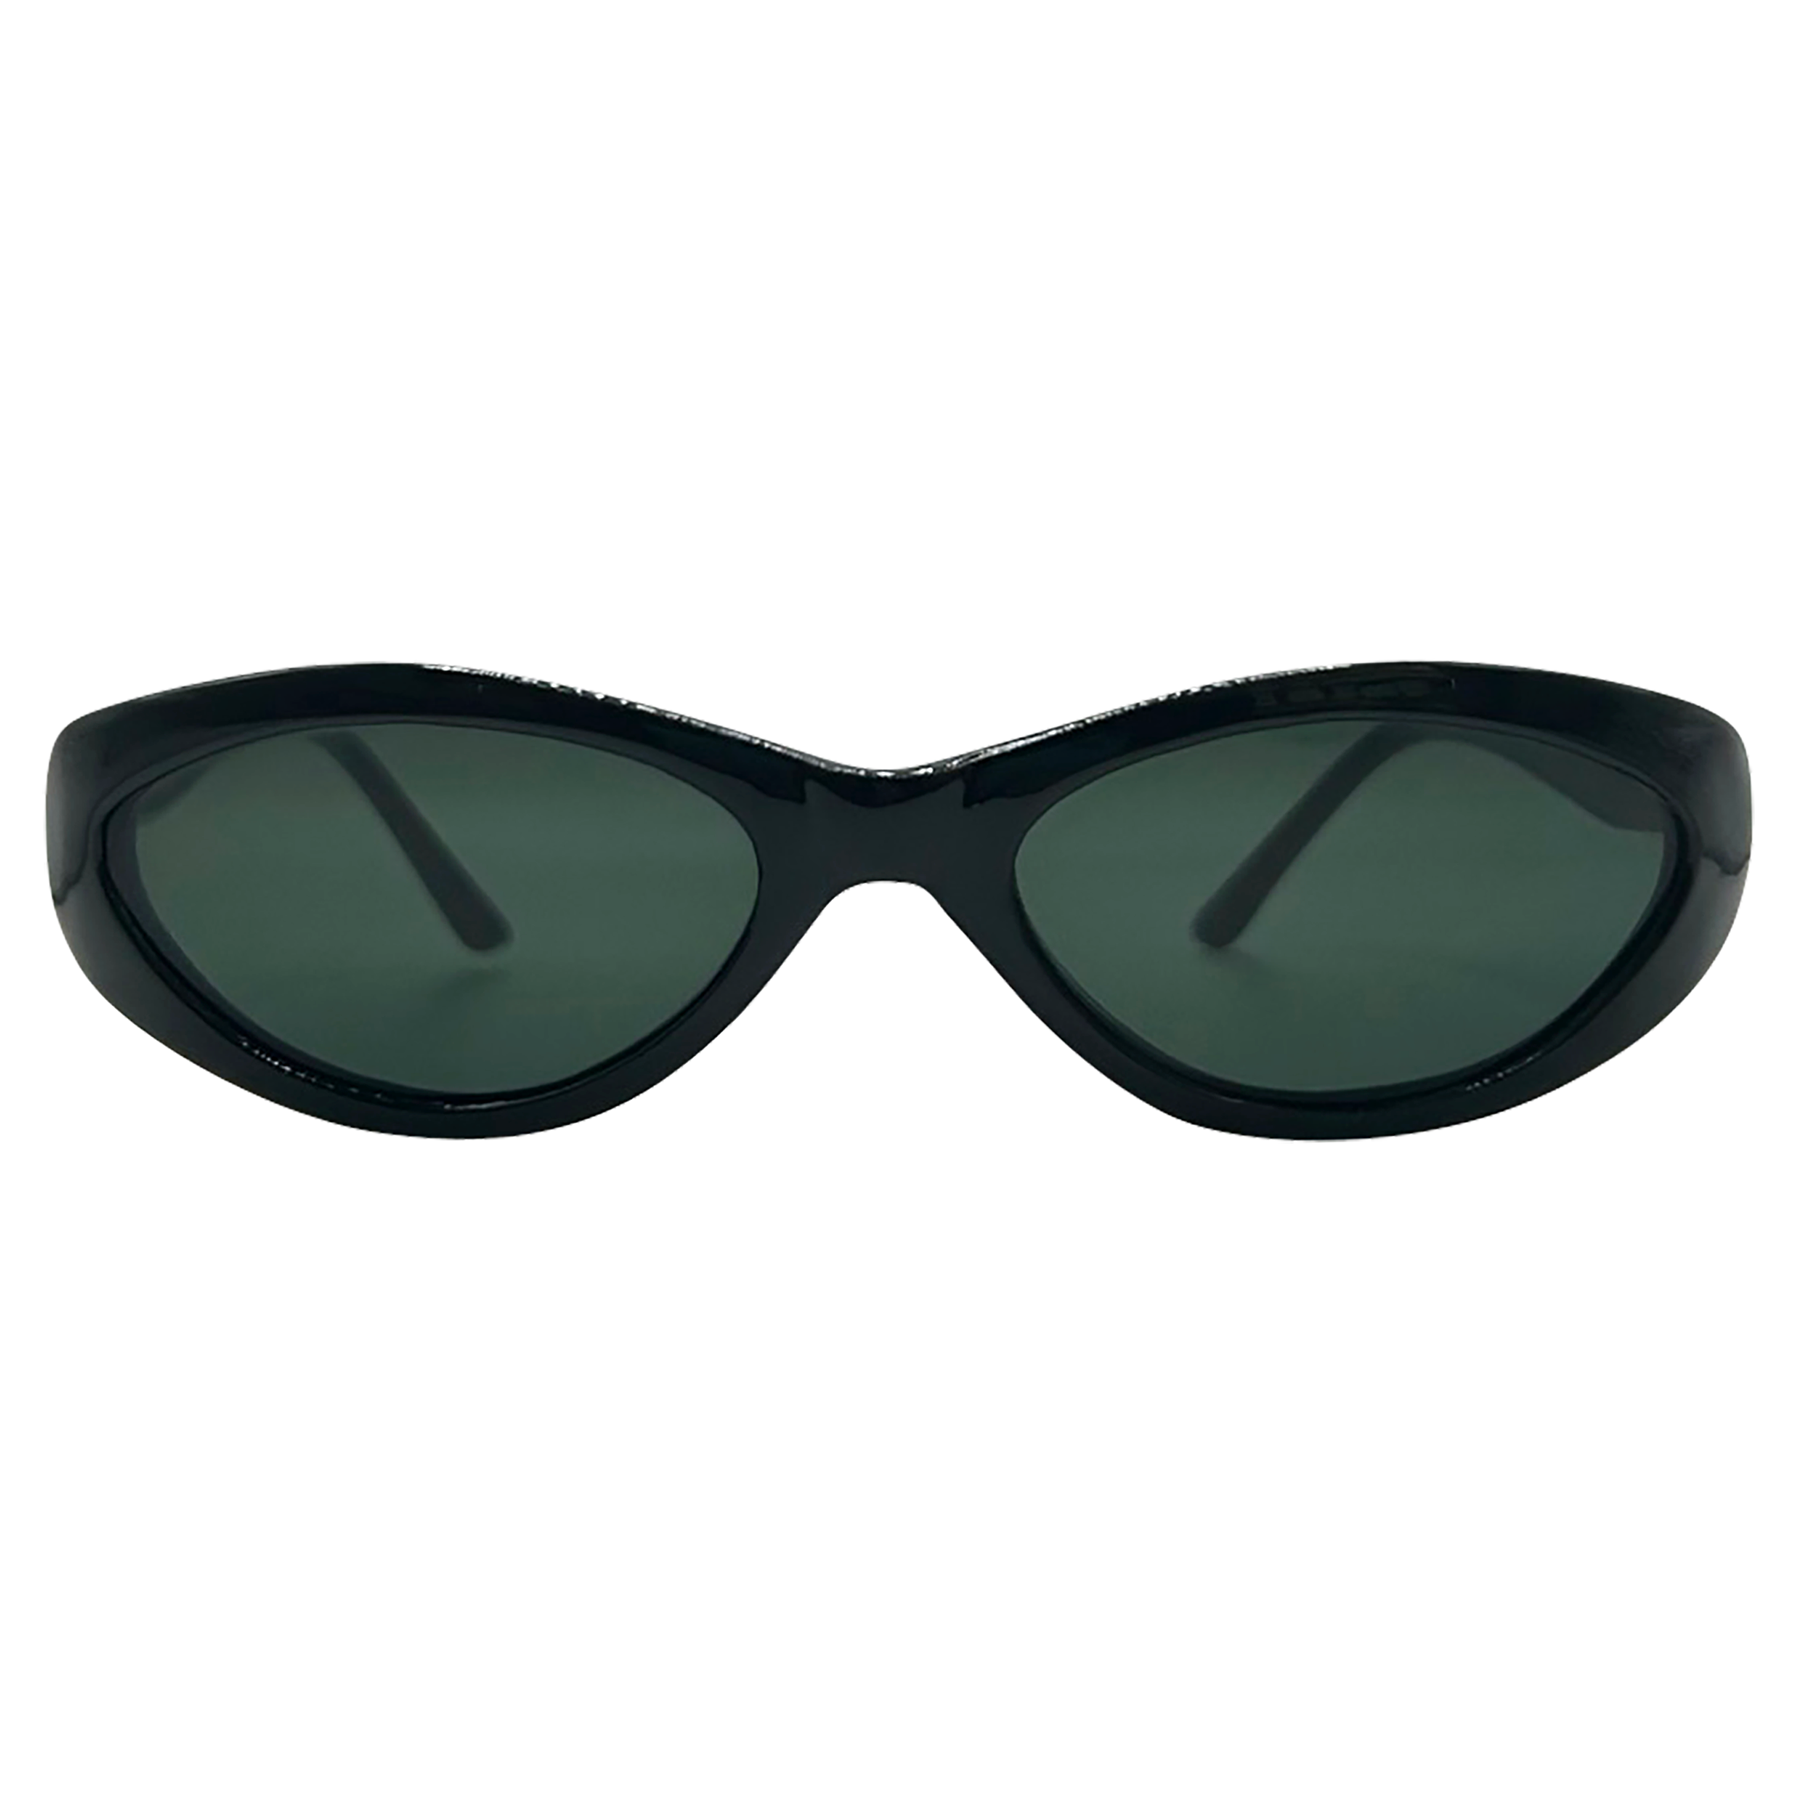 RAMBUTAN Oval Wrap Sunglasses